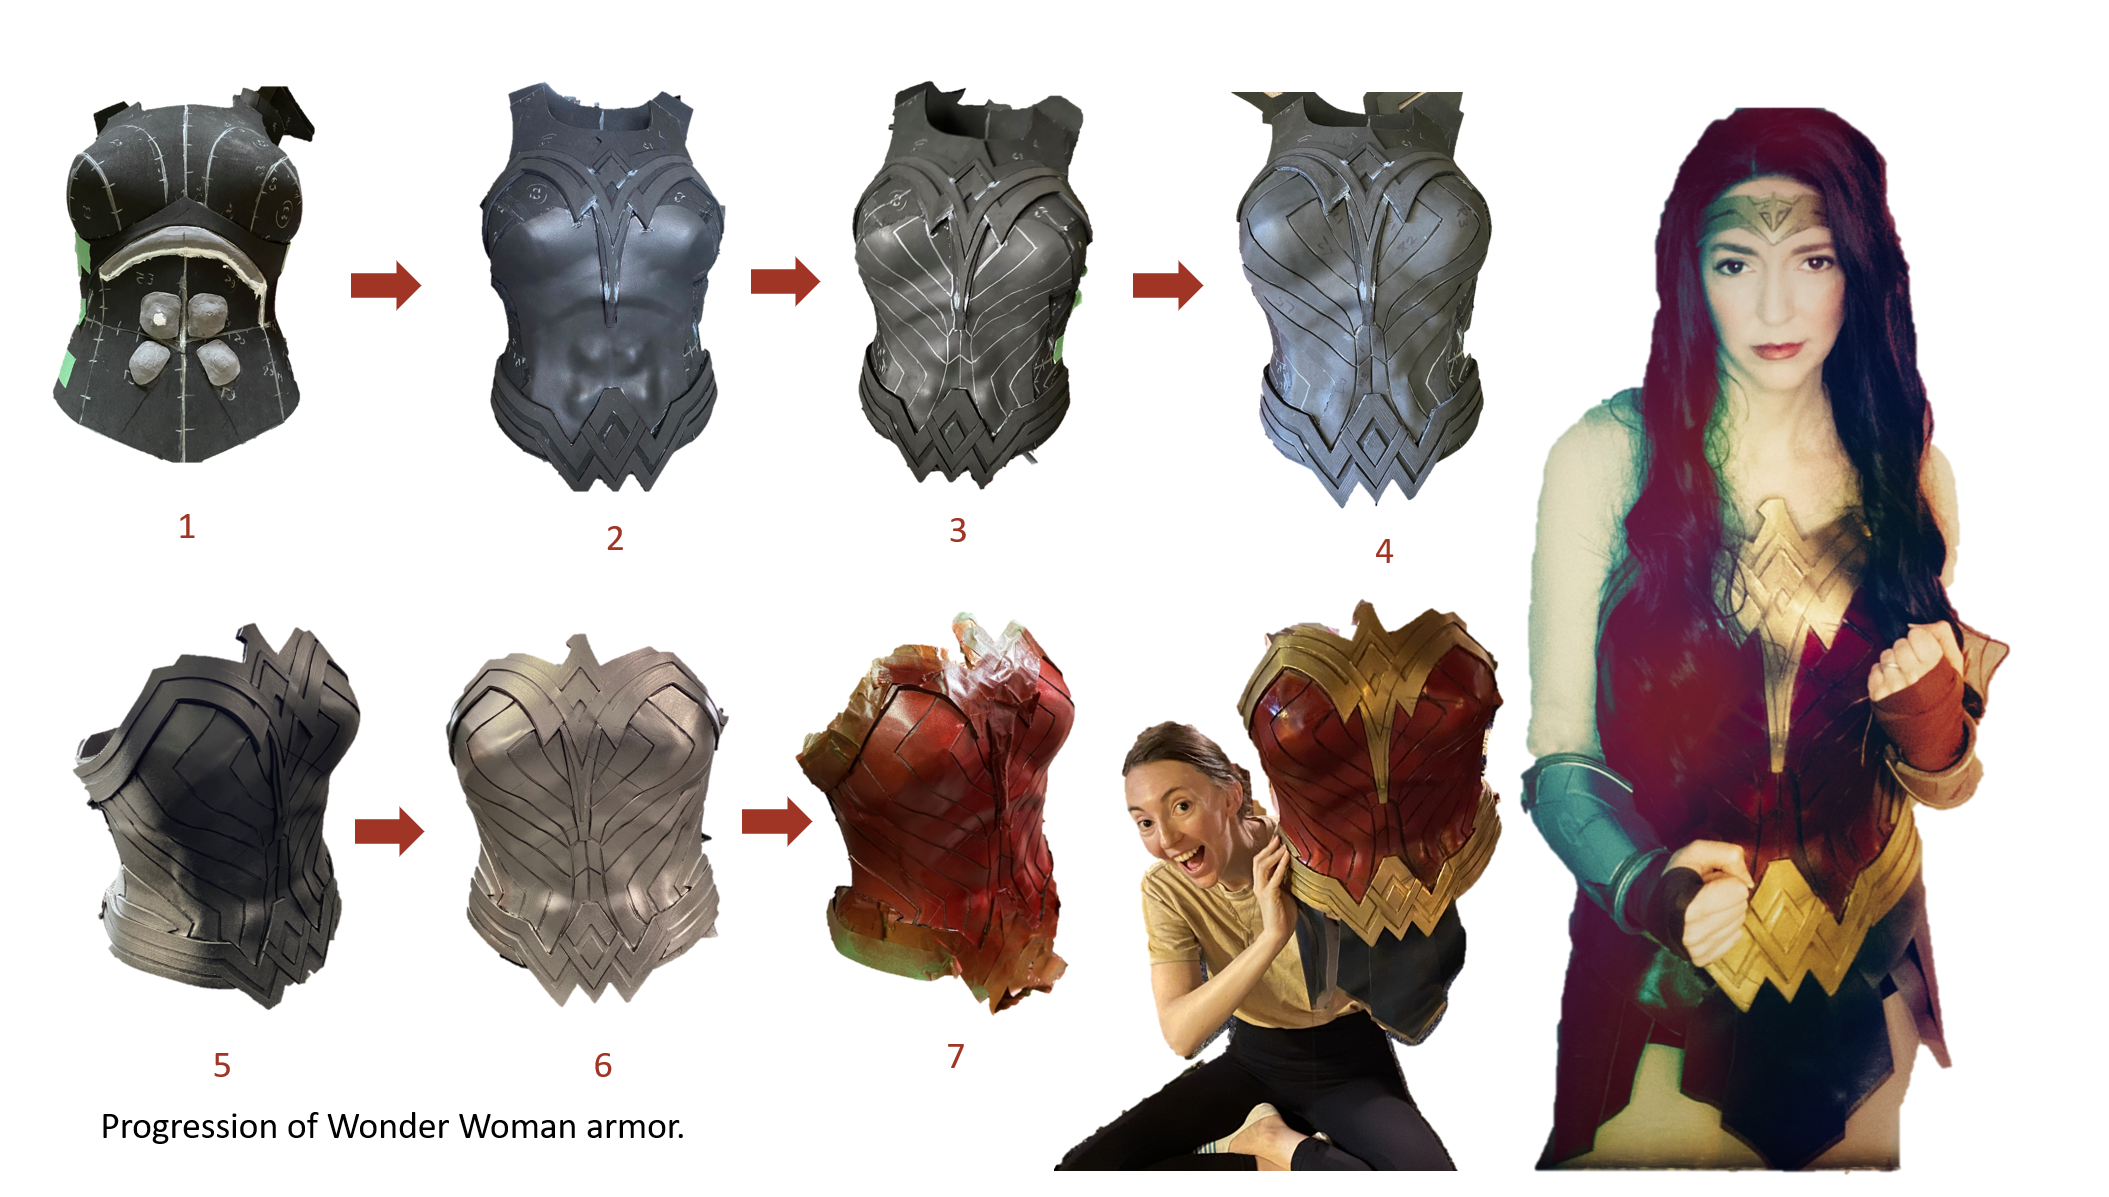 Progression of Wonder Woman armor.